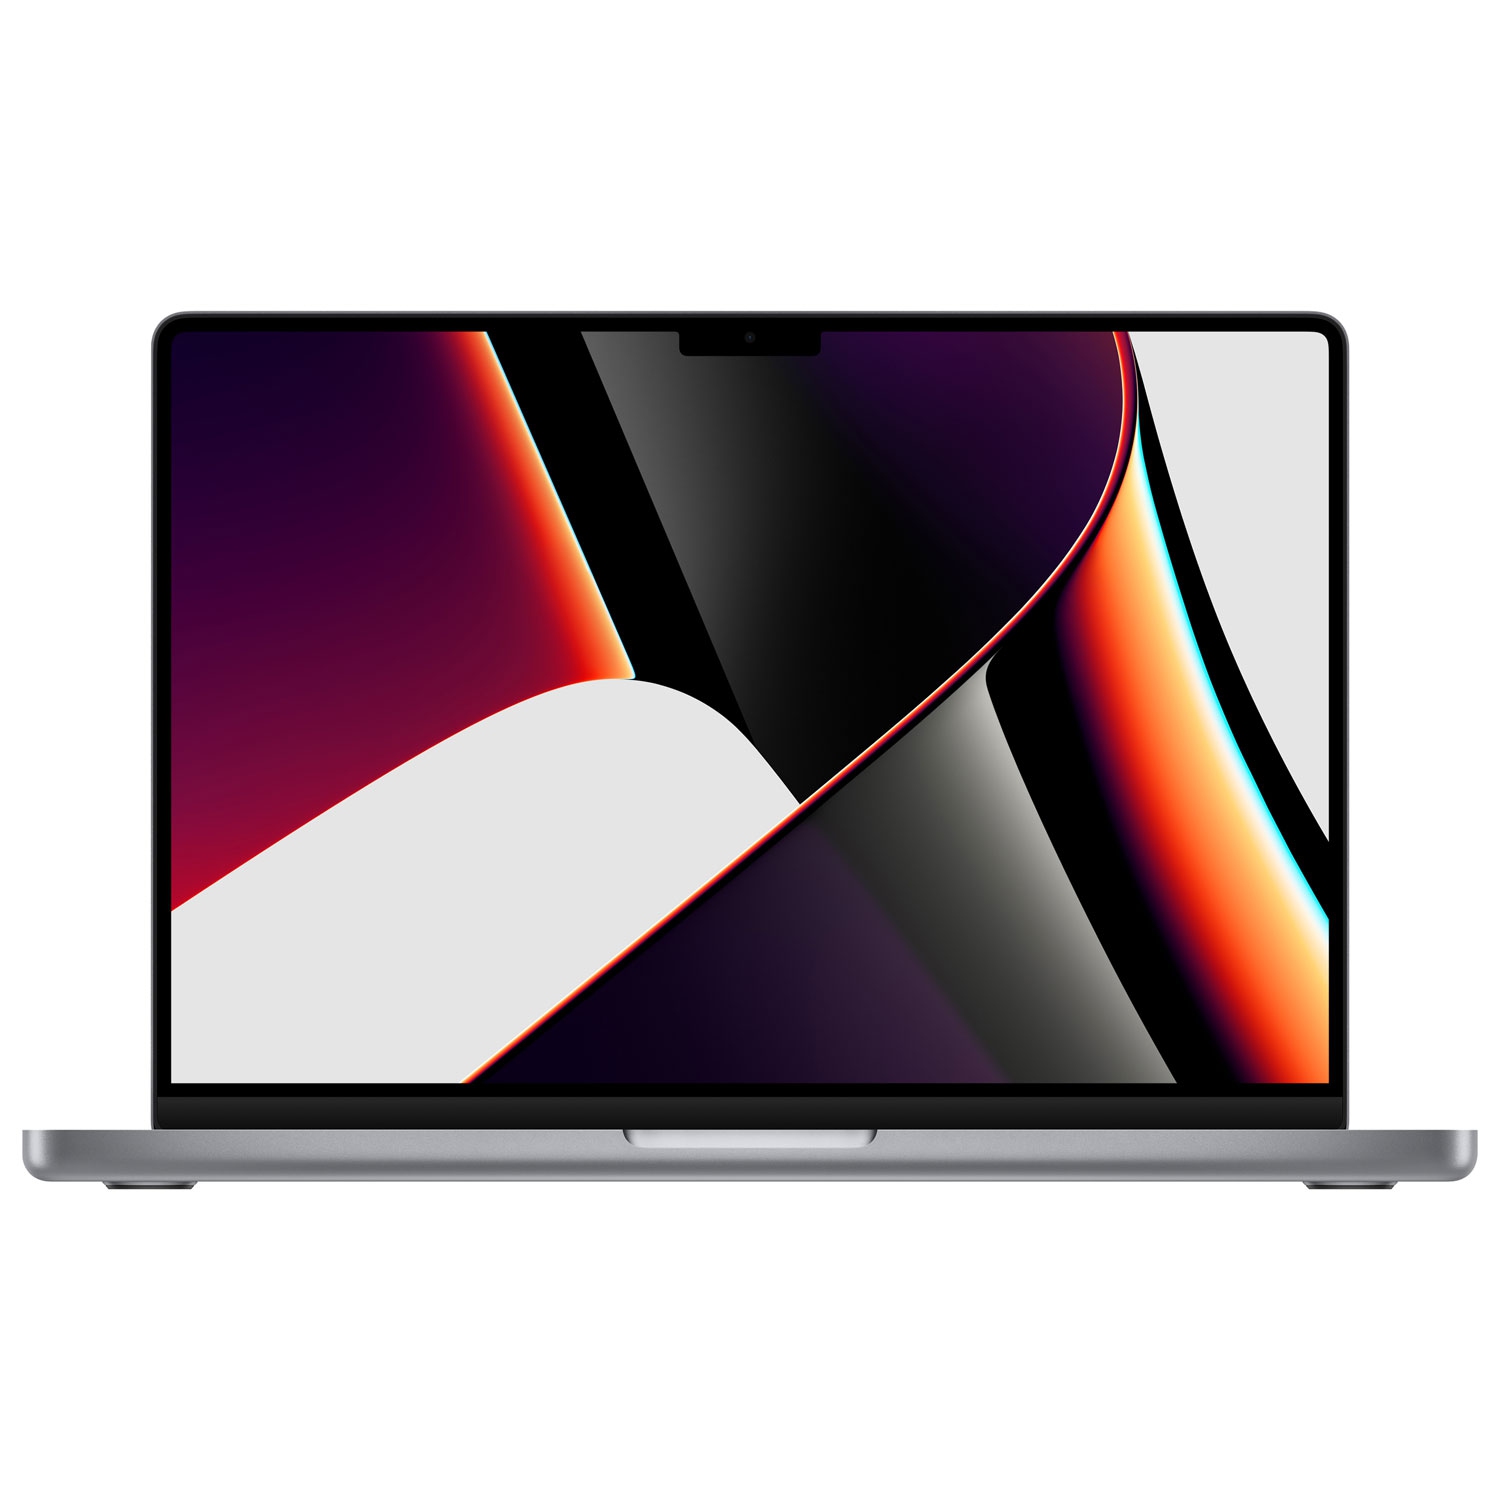 Apple MacBook Pro 14" (2021) - Space Grey (Apple M1 Pro Chip / 512GB SSD / 16GB RAM) - Apple Care+ Expires OCTOBER 2024 - English - Open Box